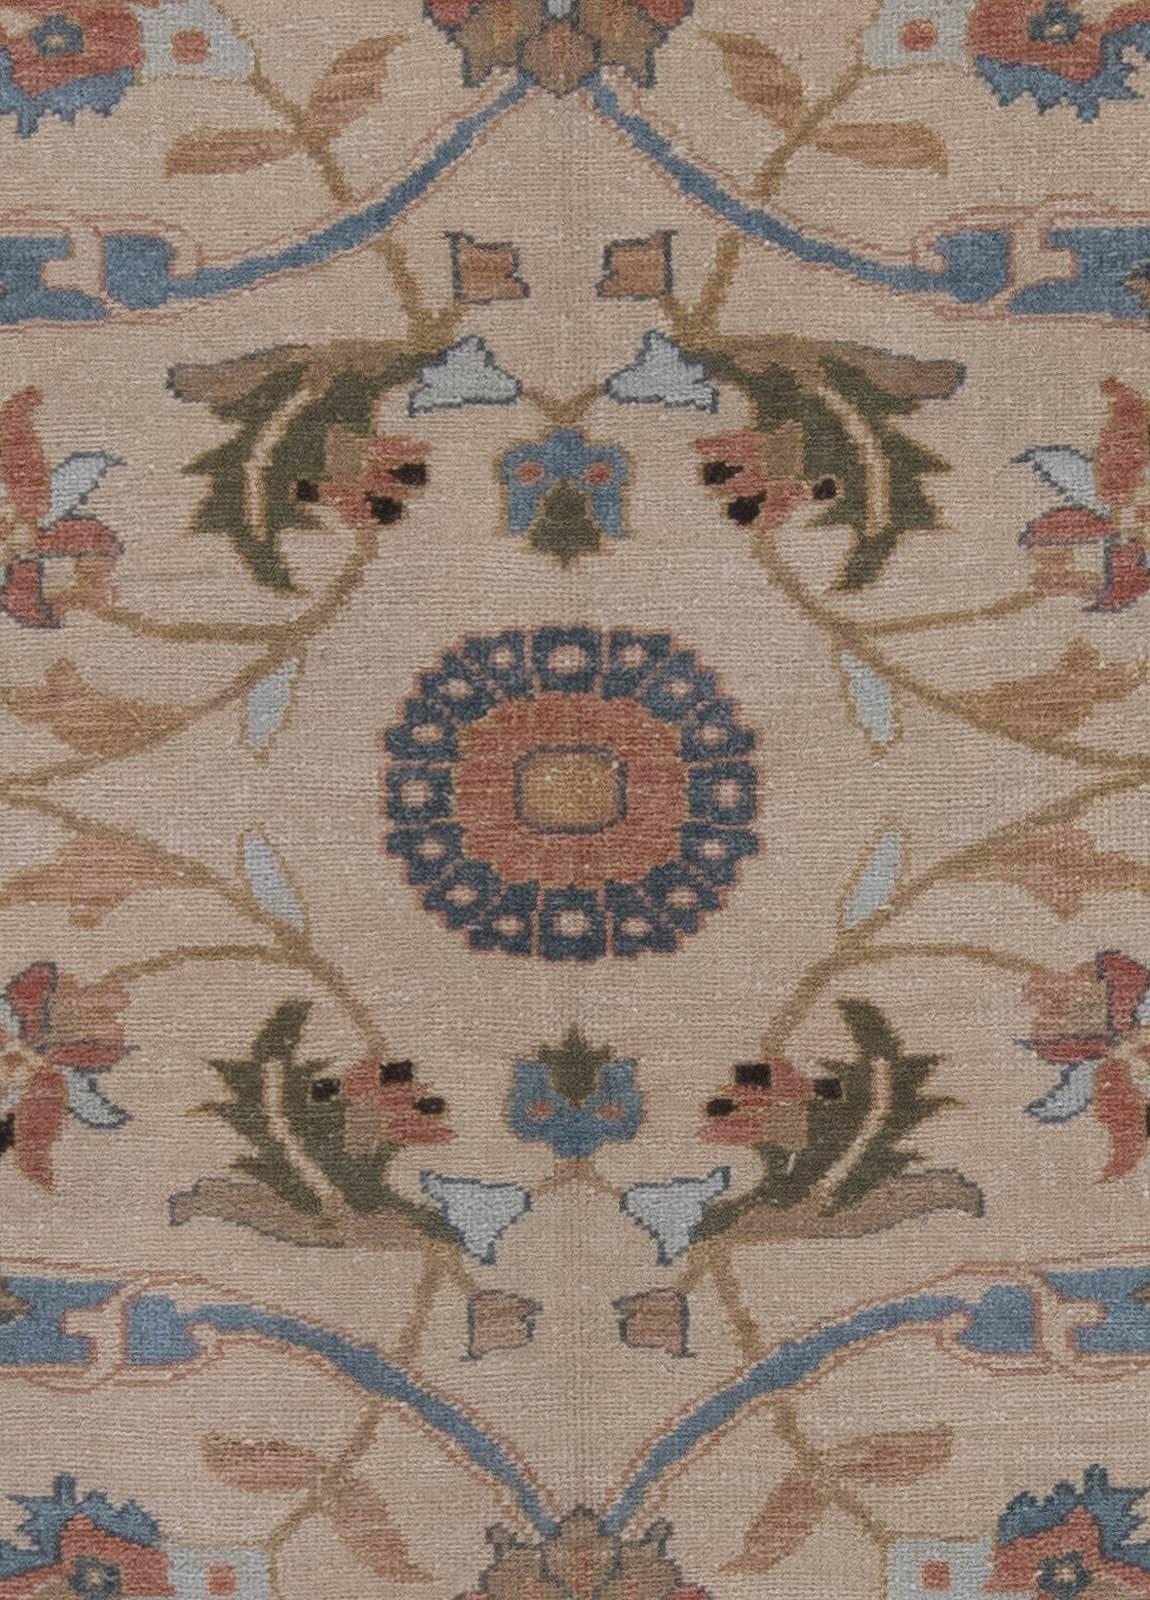 Traditional oriental inspired blue, salmon pink and beige wool rug by Doris Leslie Blau.
Size: 6'4